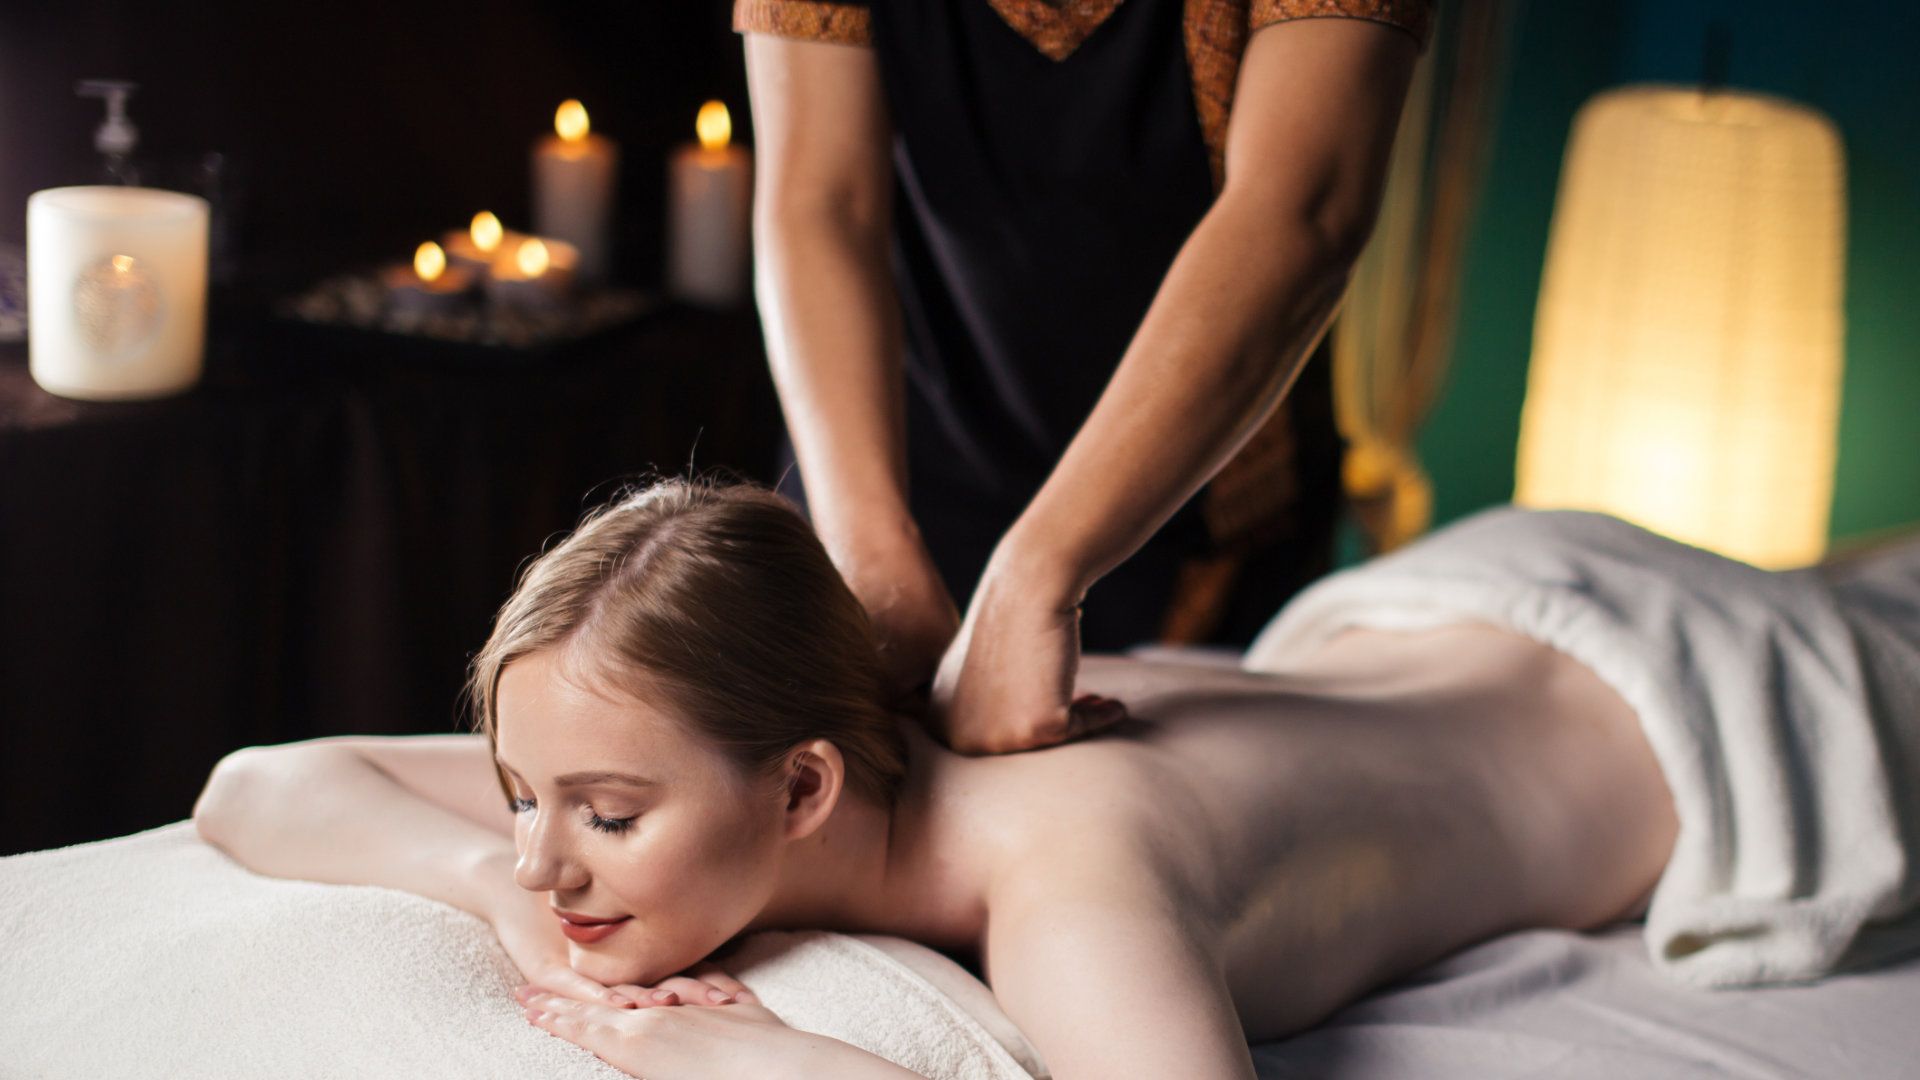 Client needs more than massage